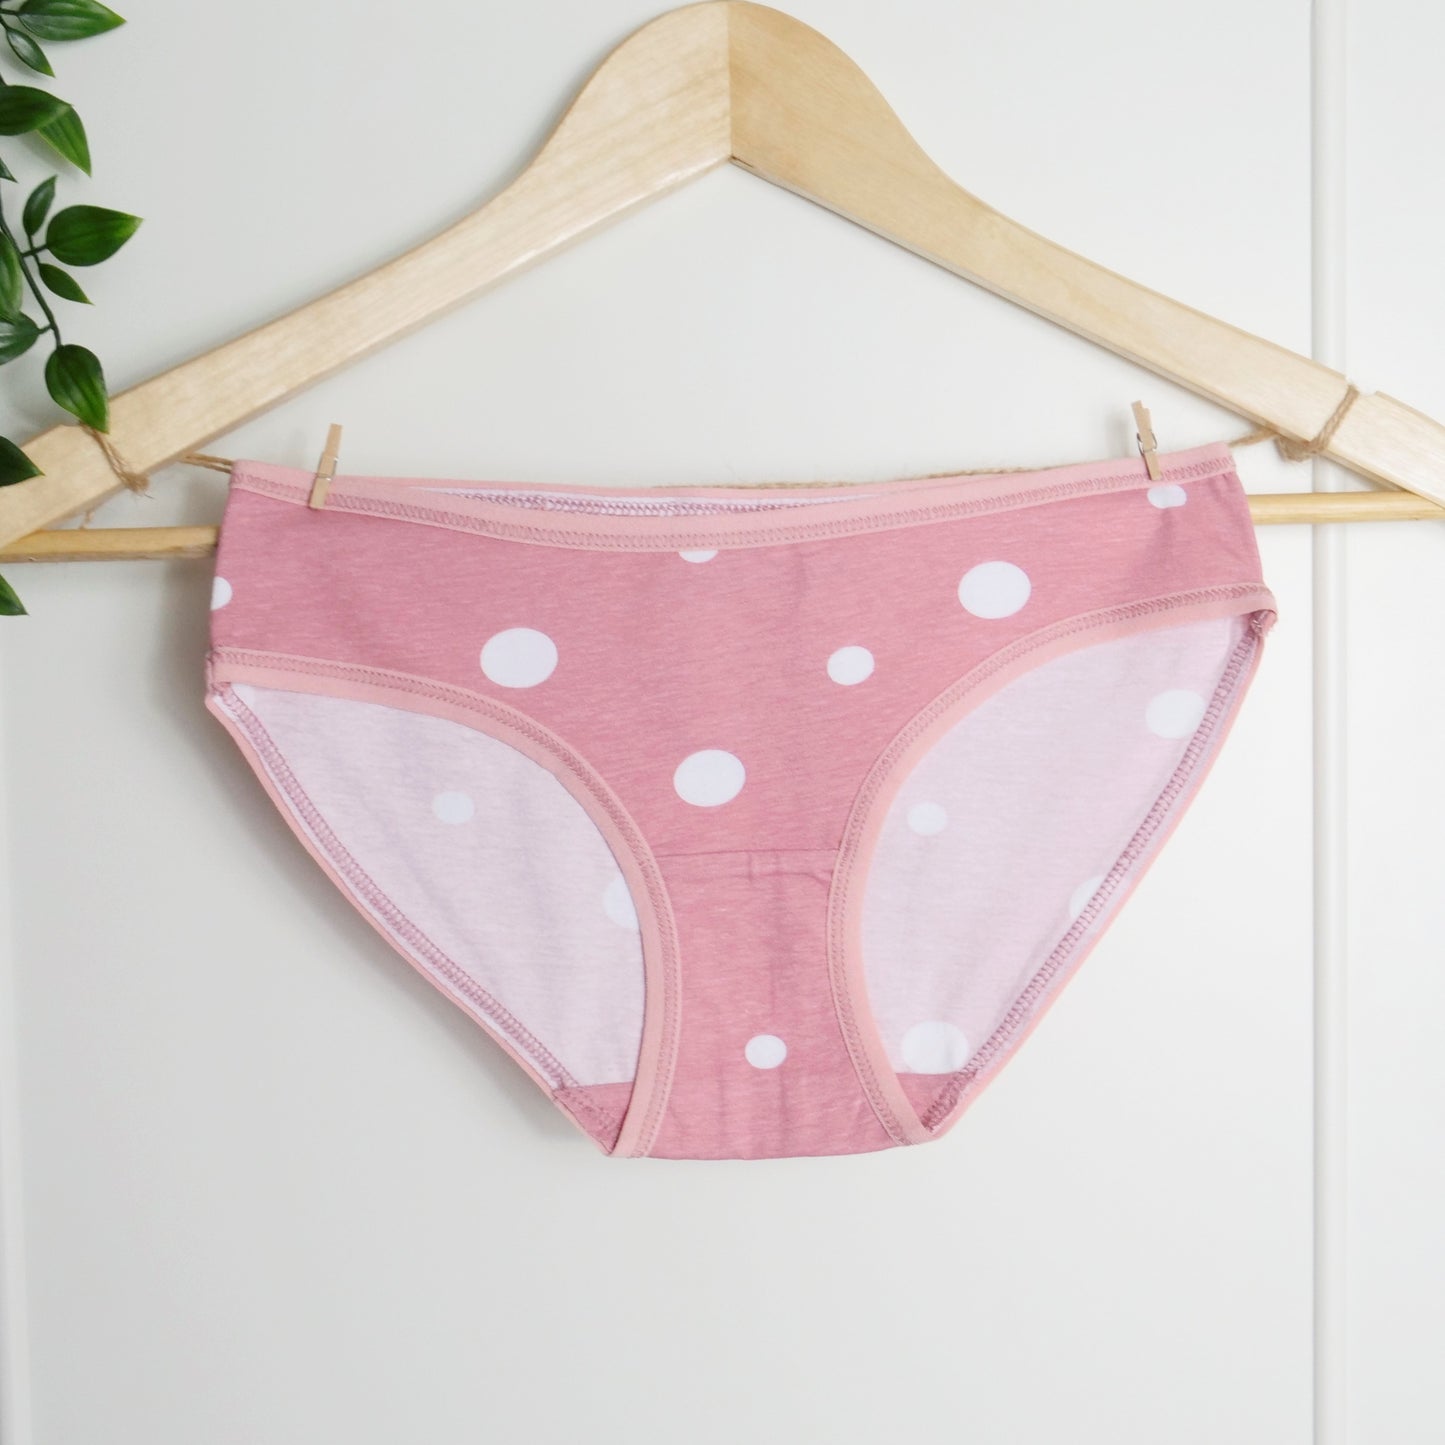 Women's organic cotton low-rise bikini bottoms - pink with white dots